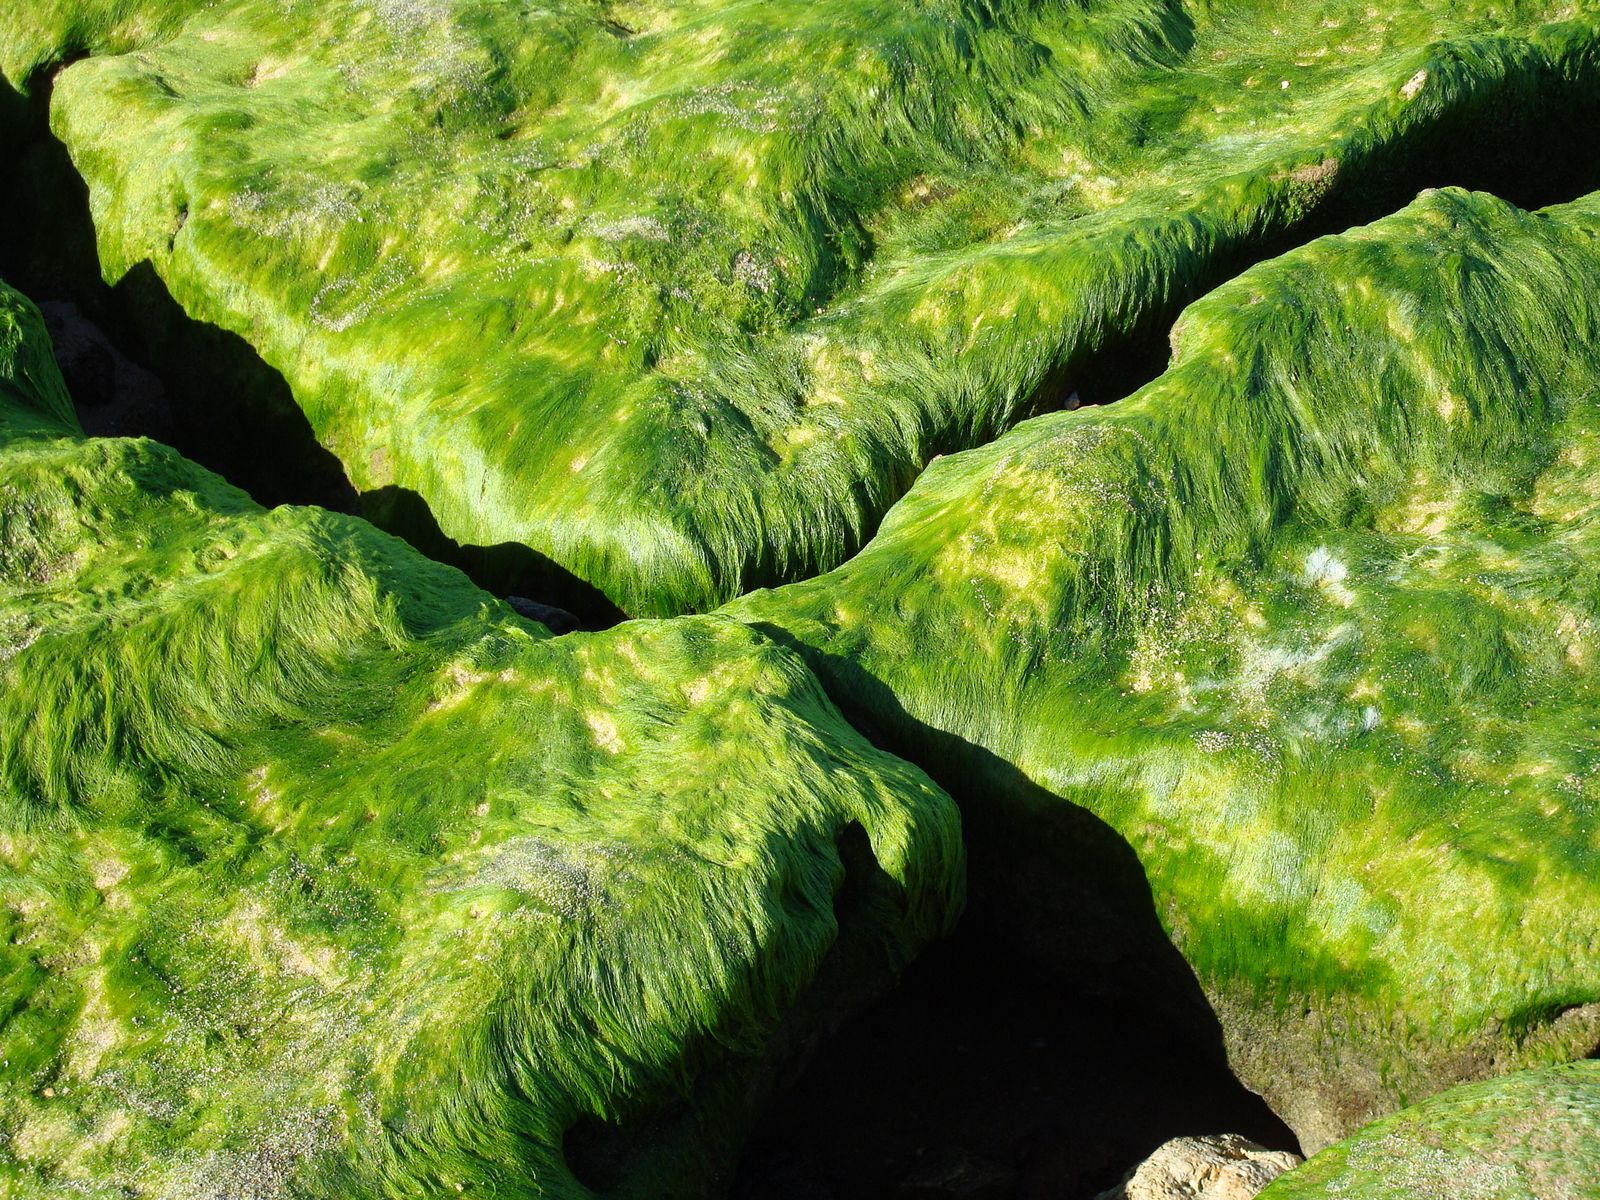 File:Moss on a Rock.jpg - Wikimedia Commons